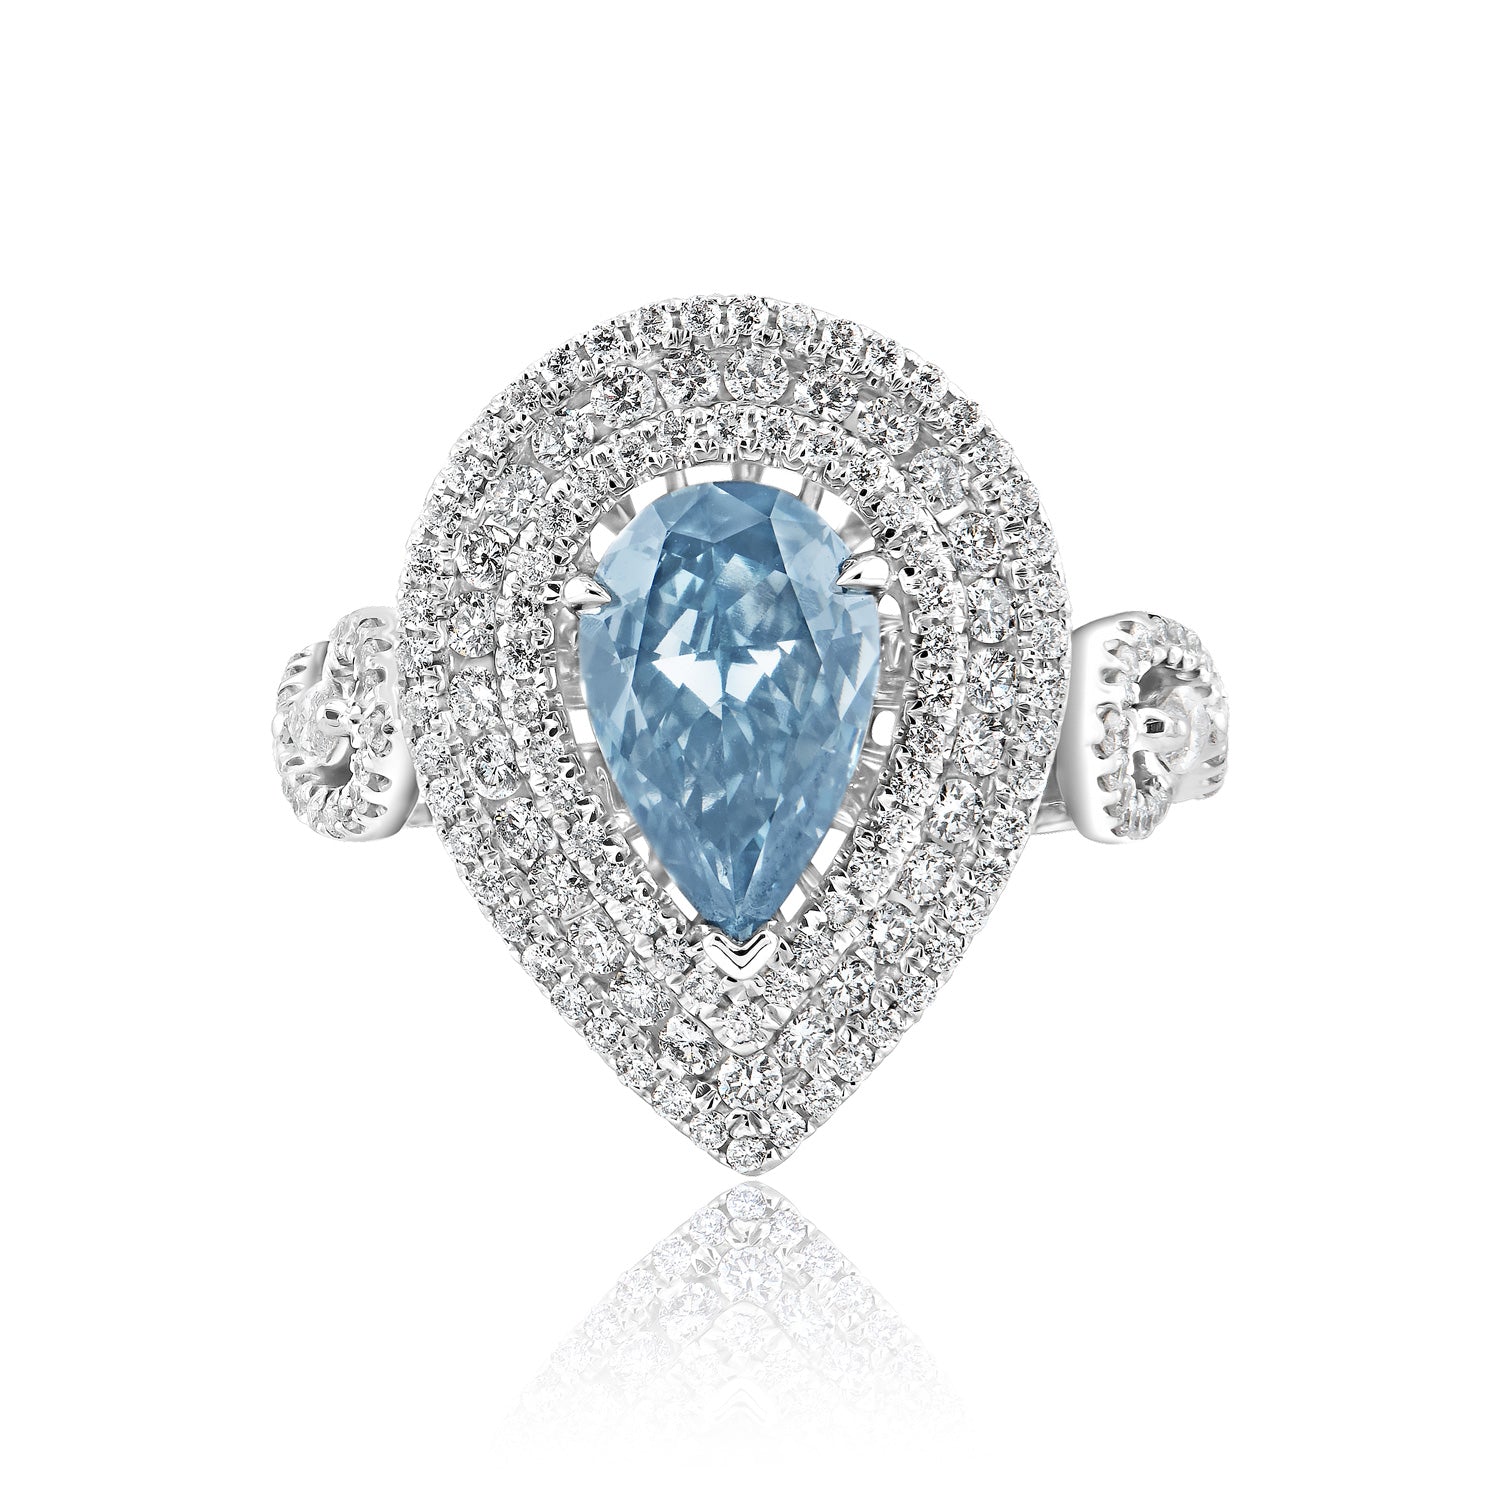 Novah 2 Carats Fancy Intense Blue VS1 Pear Shape Diamond Engagement Ring Front View